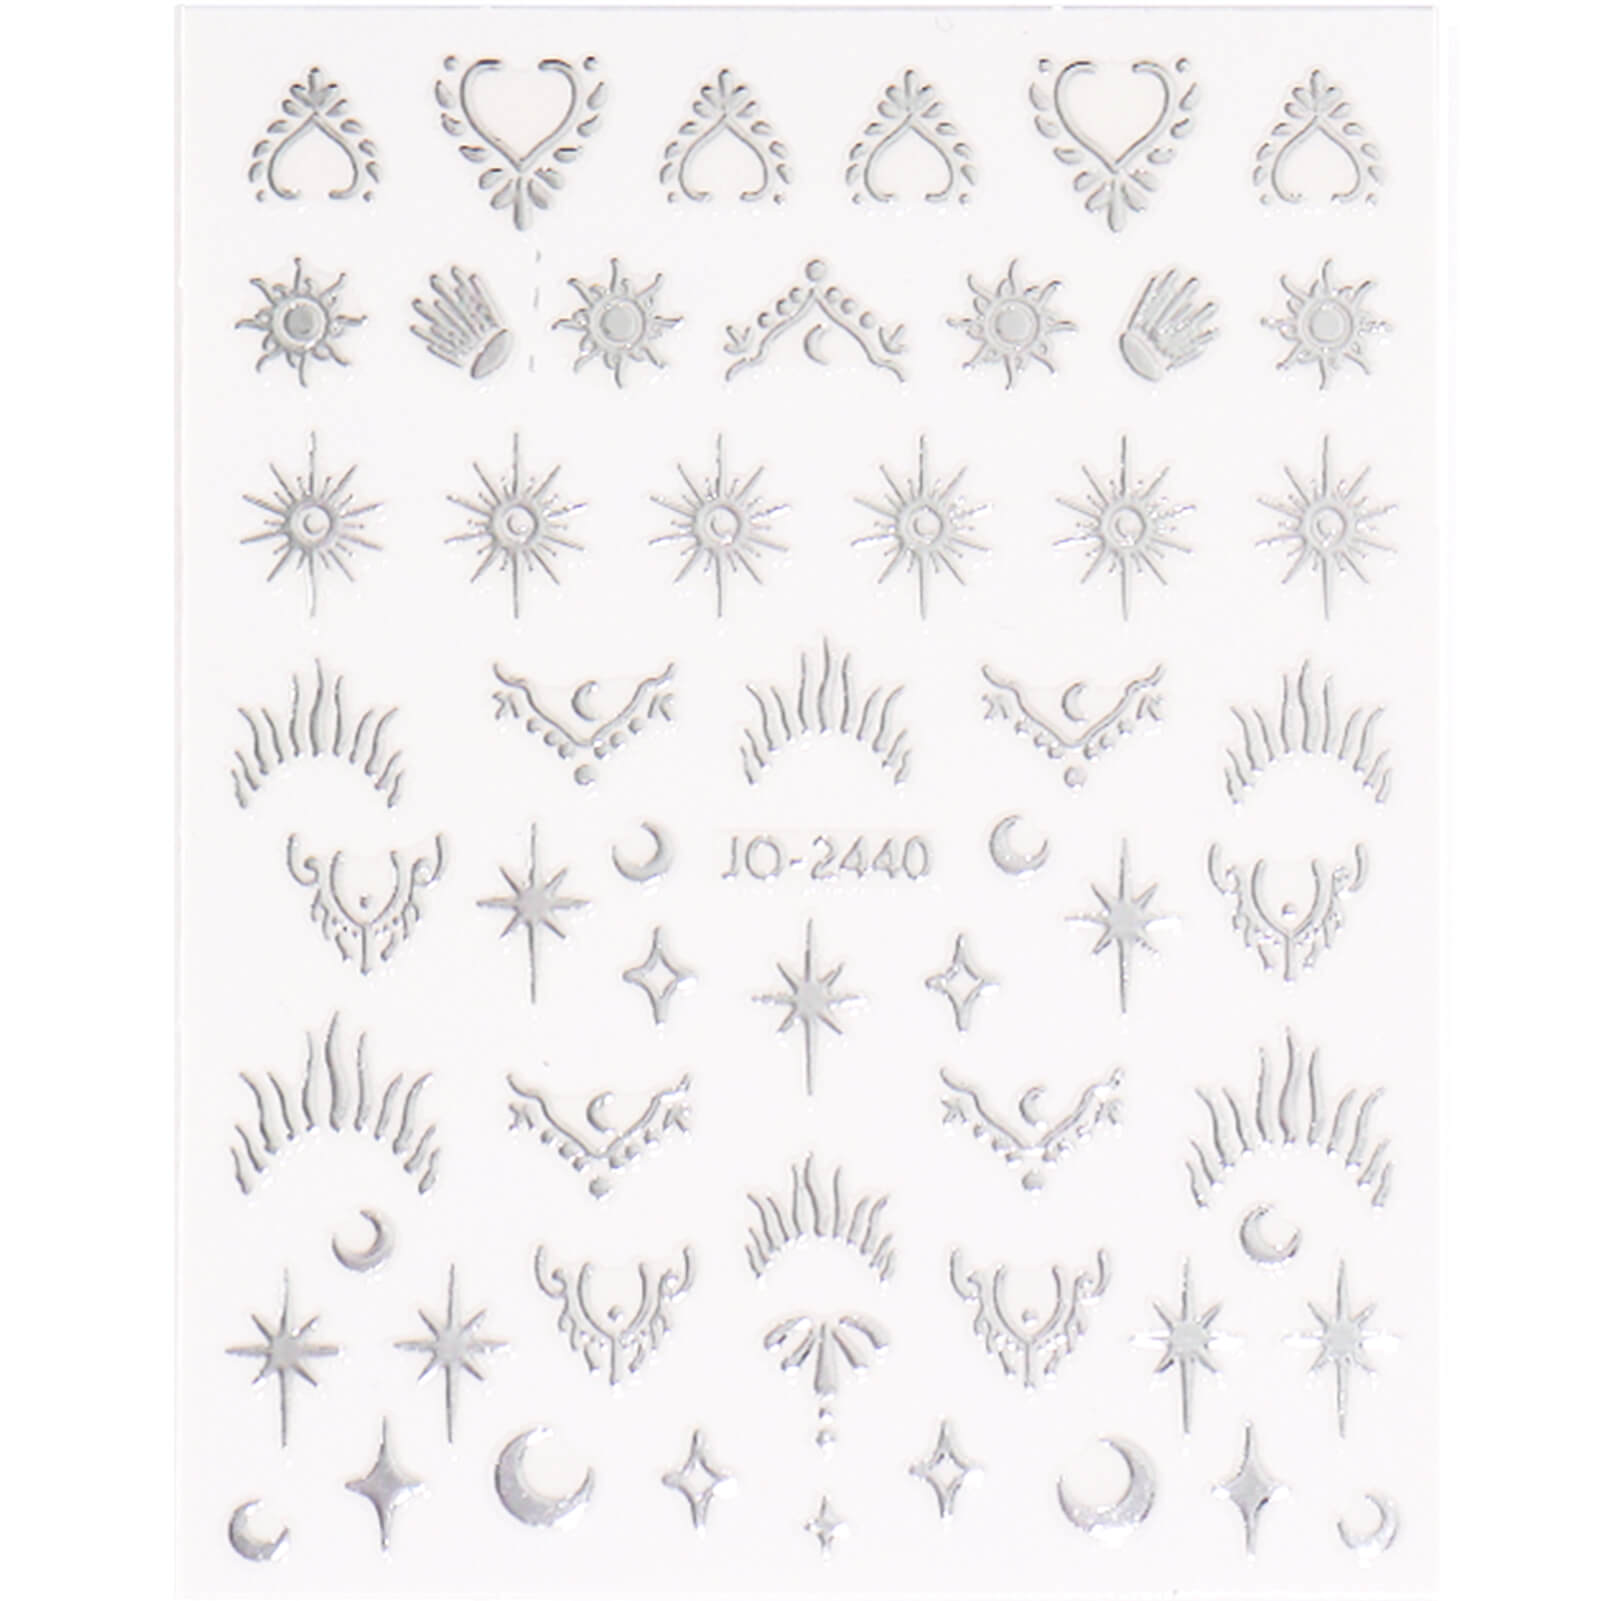 nail-art-stickers-bohemia-moon-star-2440-silver